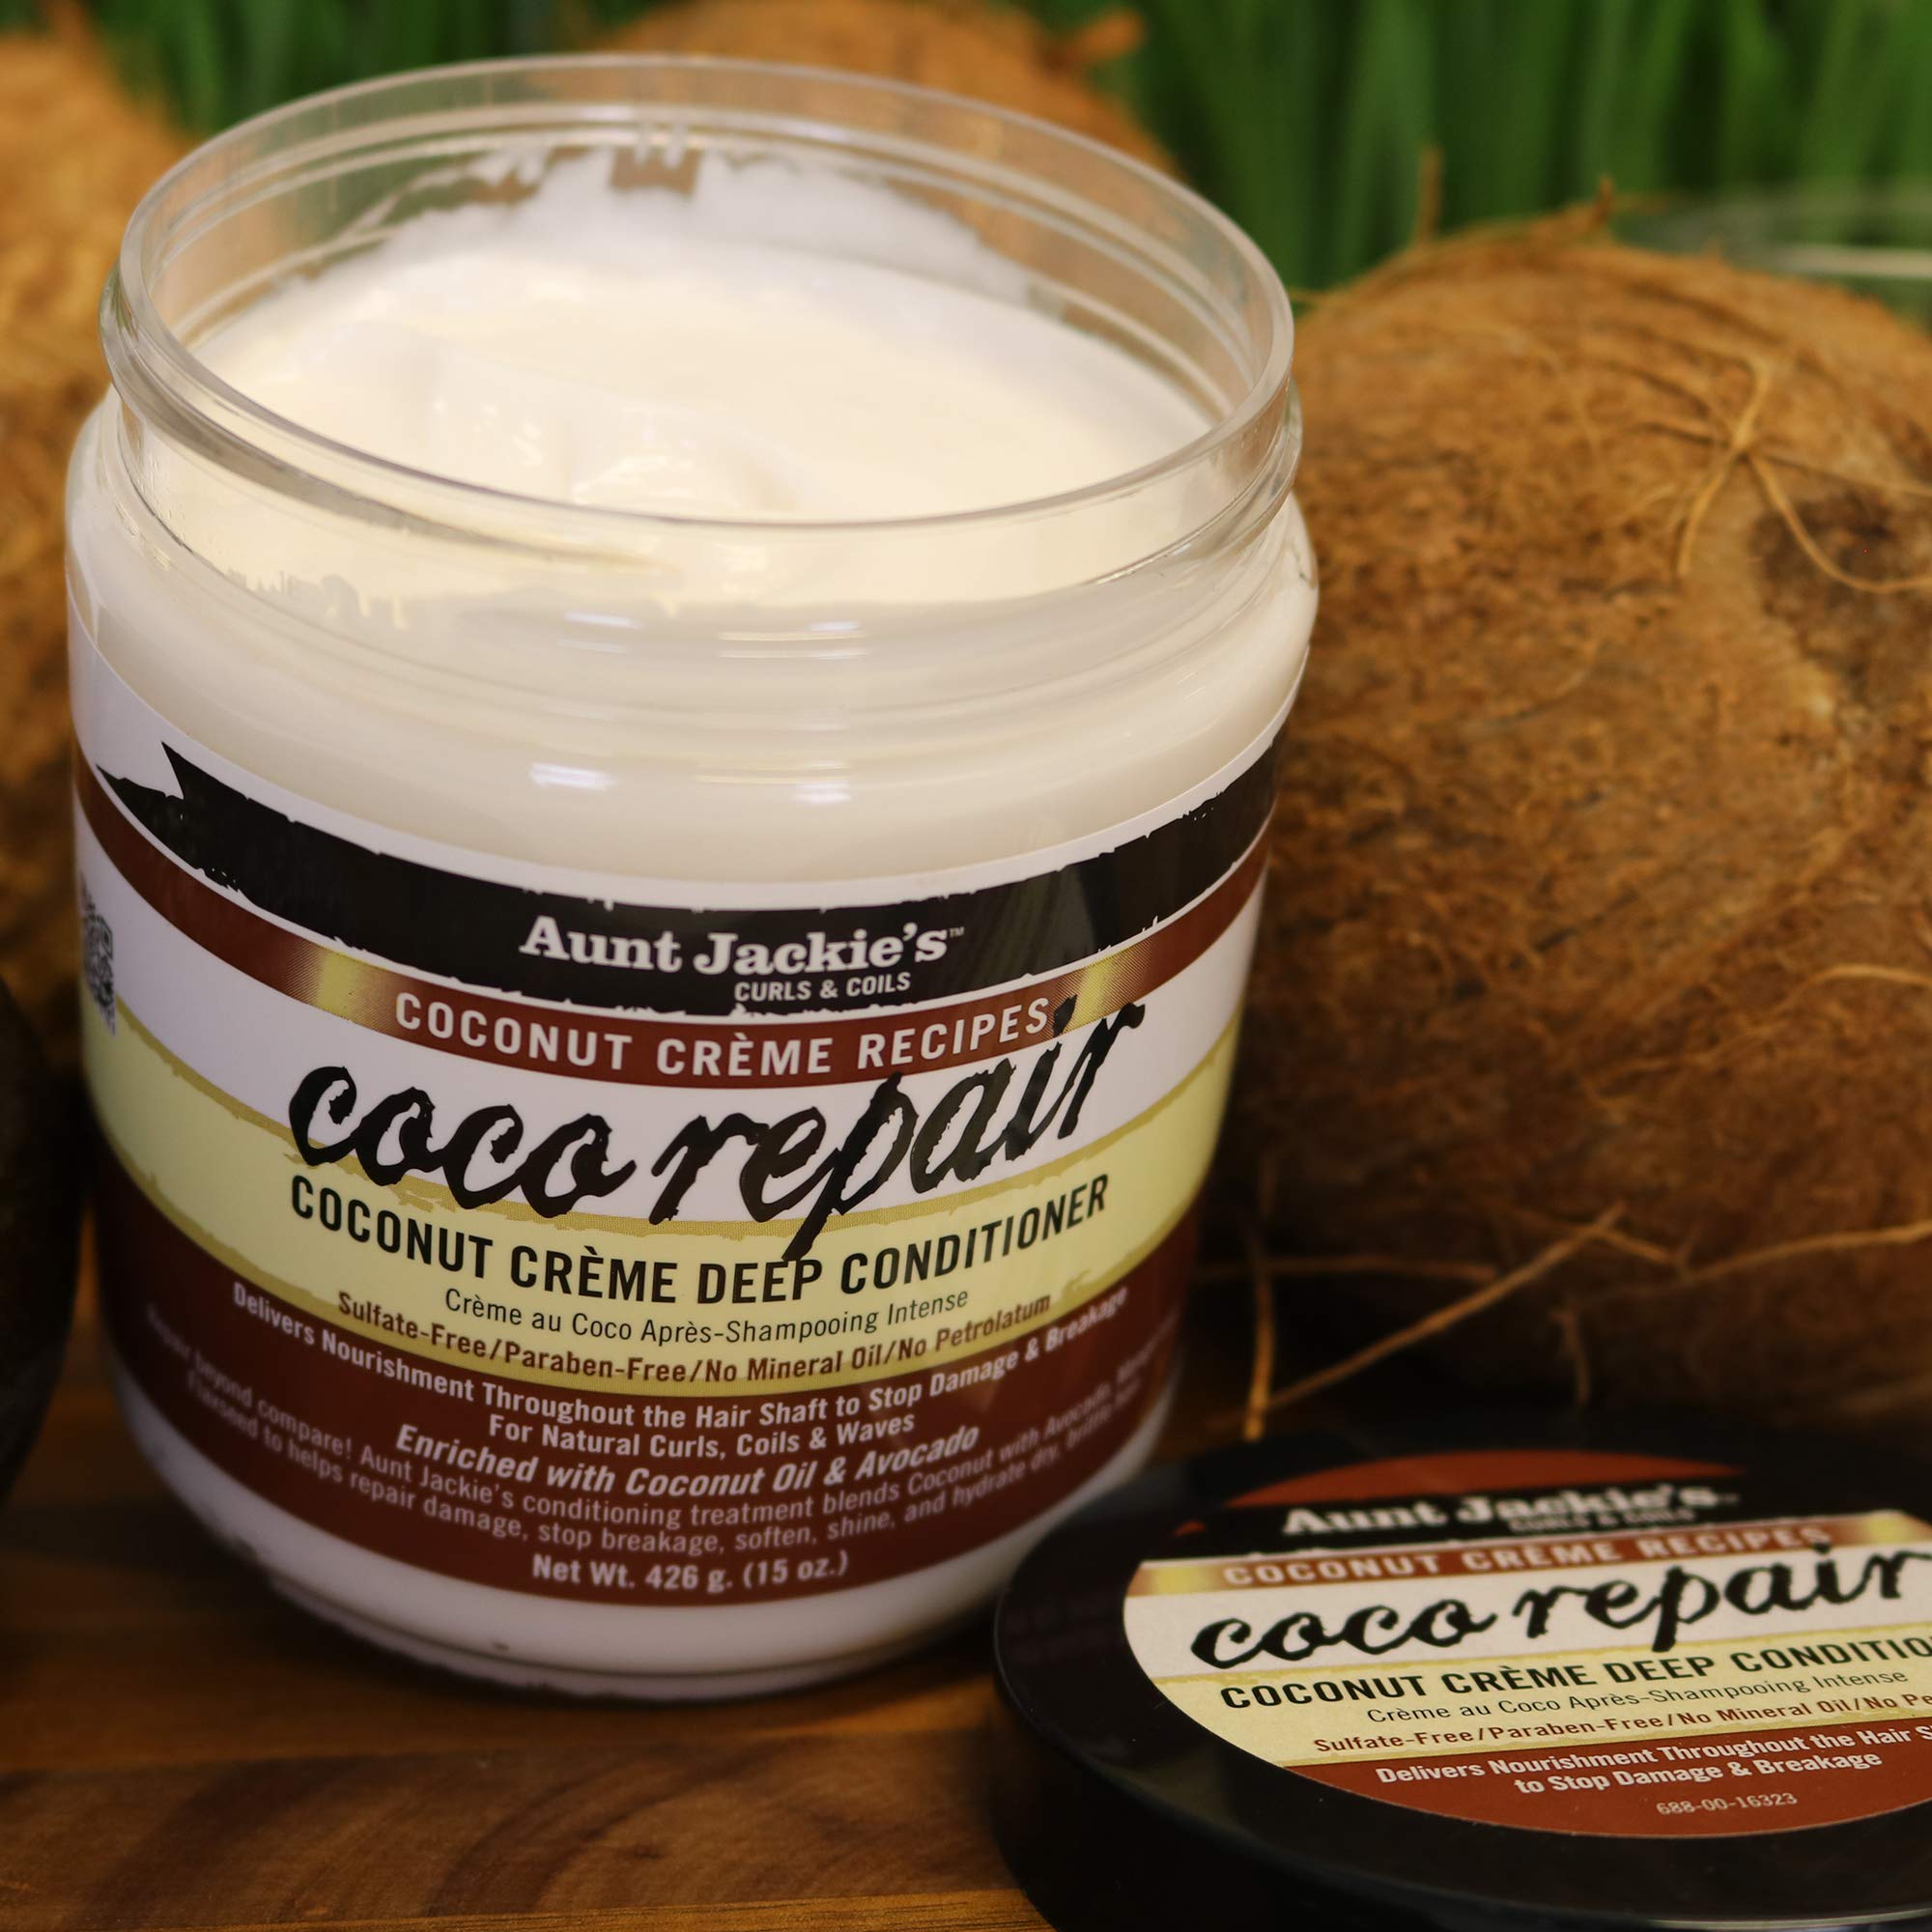 Aunt Jackie's Coconut Crème Recipes Coco Repair Deep Hair Conditioner, Delivers Nourishment, Stops Damage, Breakage for Natural Curls, 15 oz